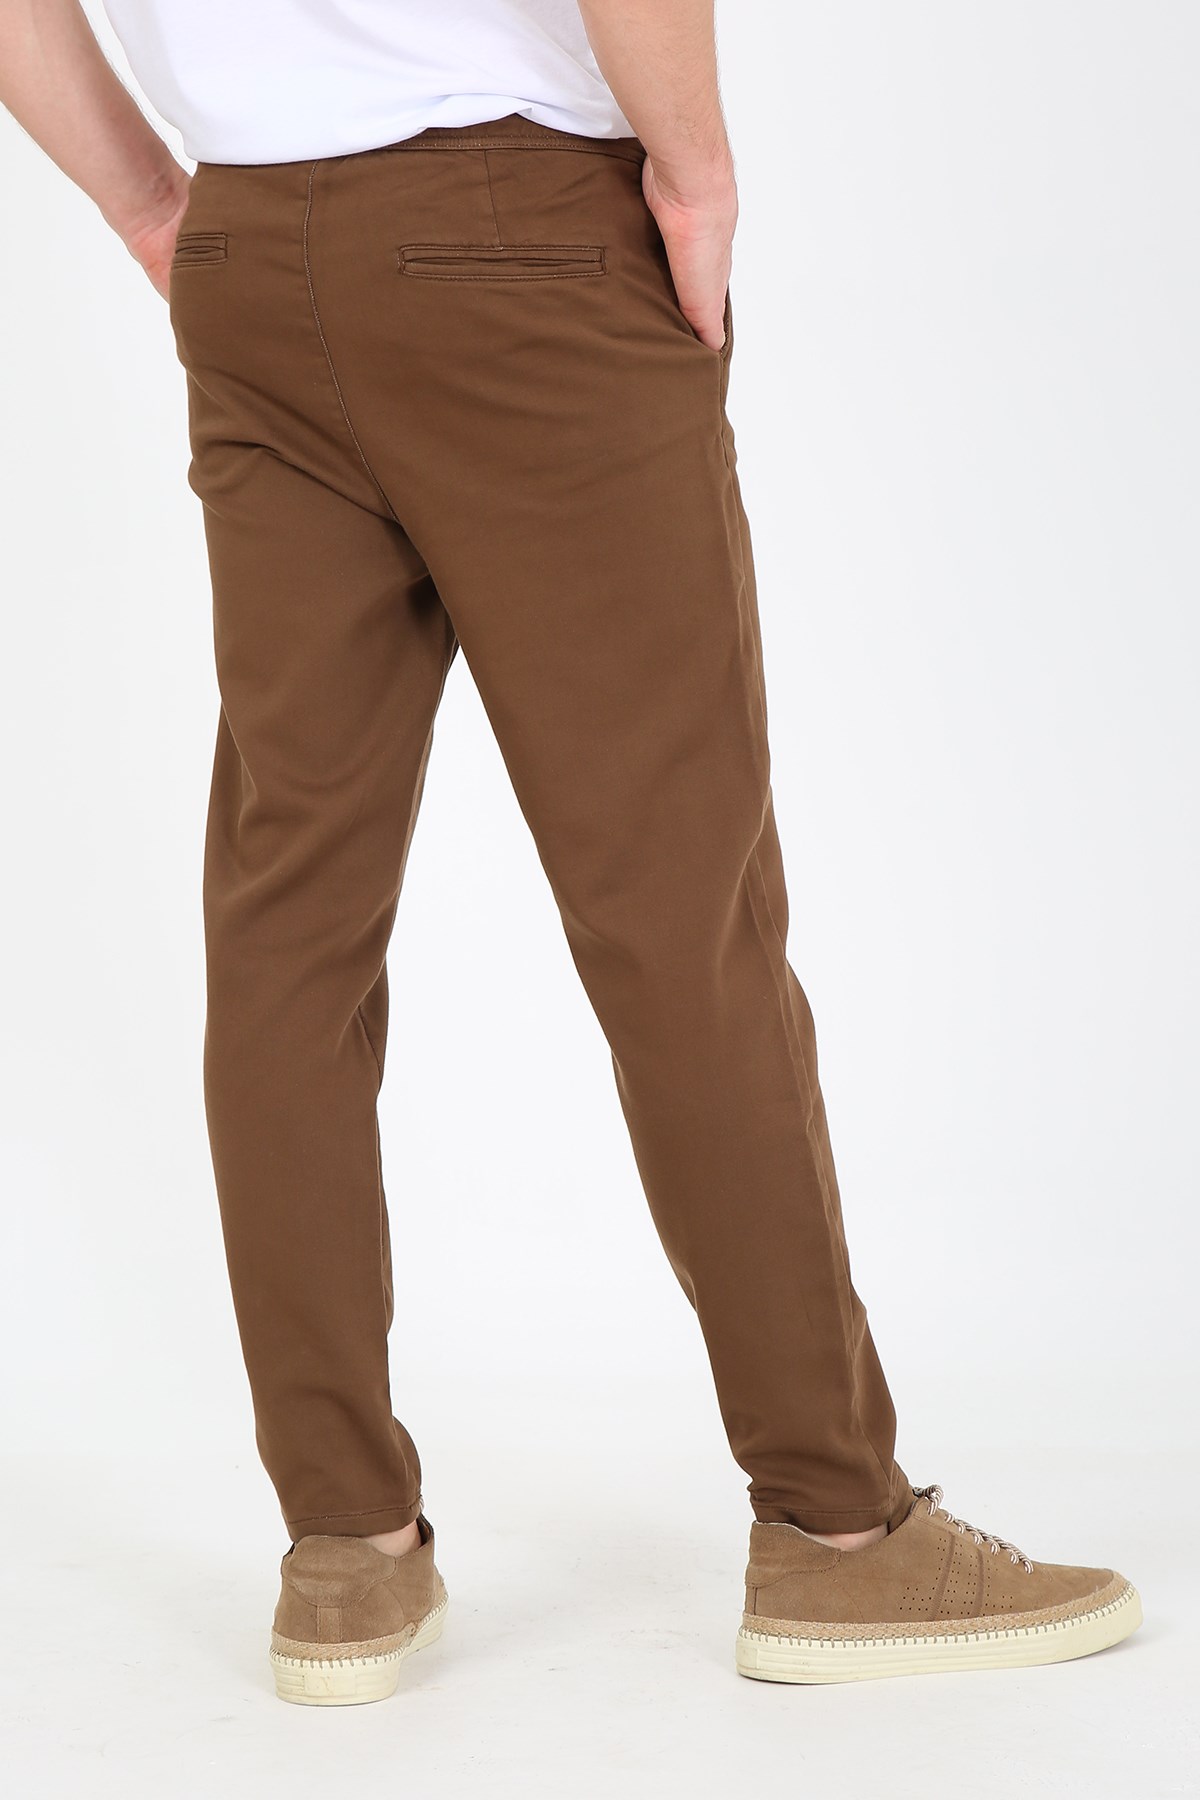 Premium Turkish Home Decor & FashionOnline shop Men's cloth trousers